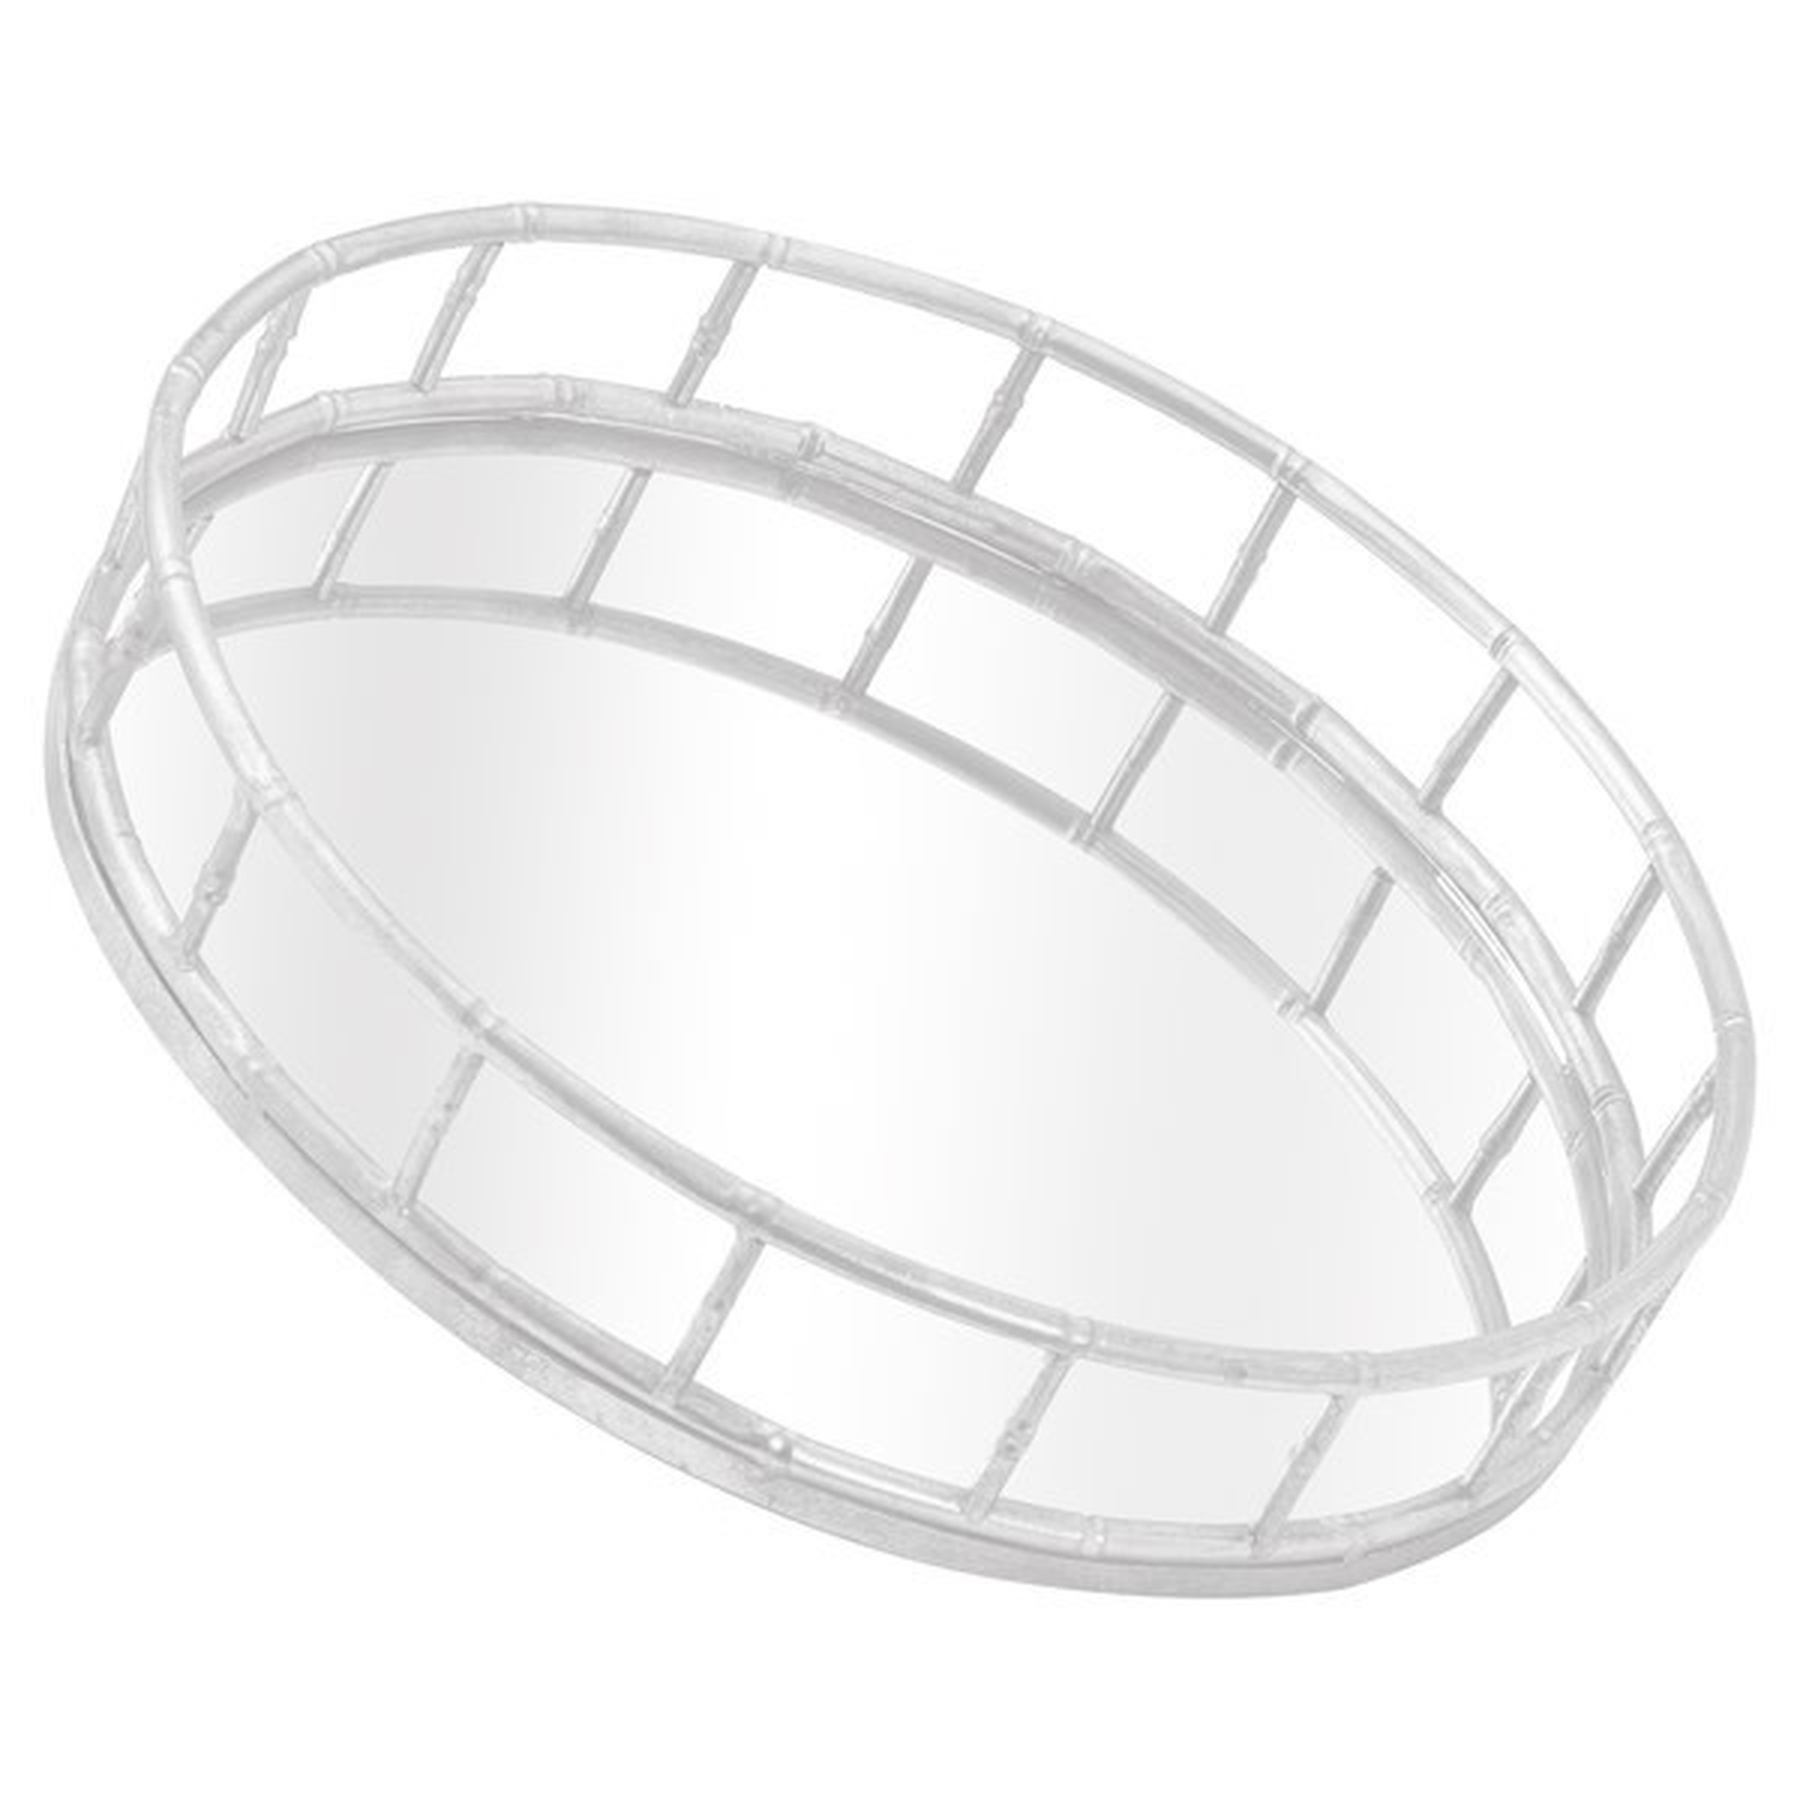 Set Of 2 Detailed Silver Circular Trays - Image 2